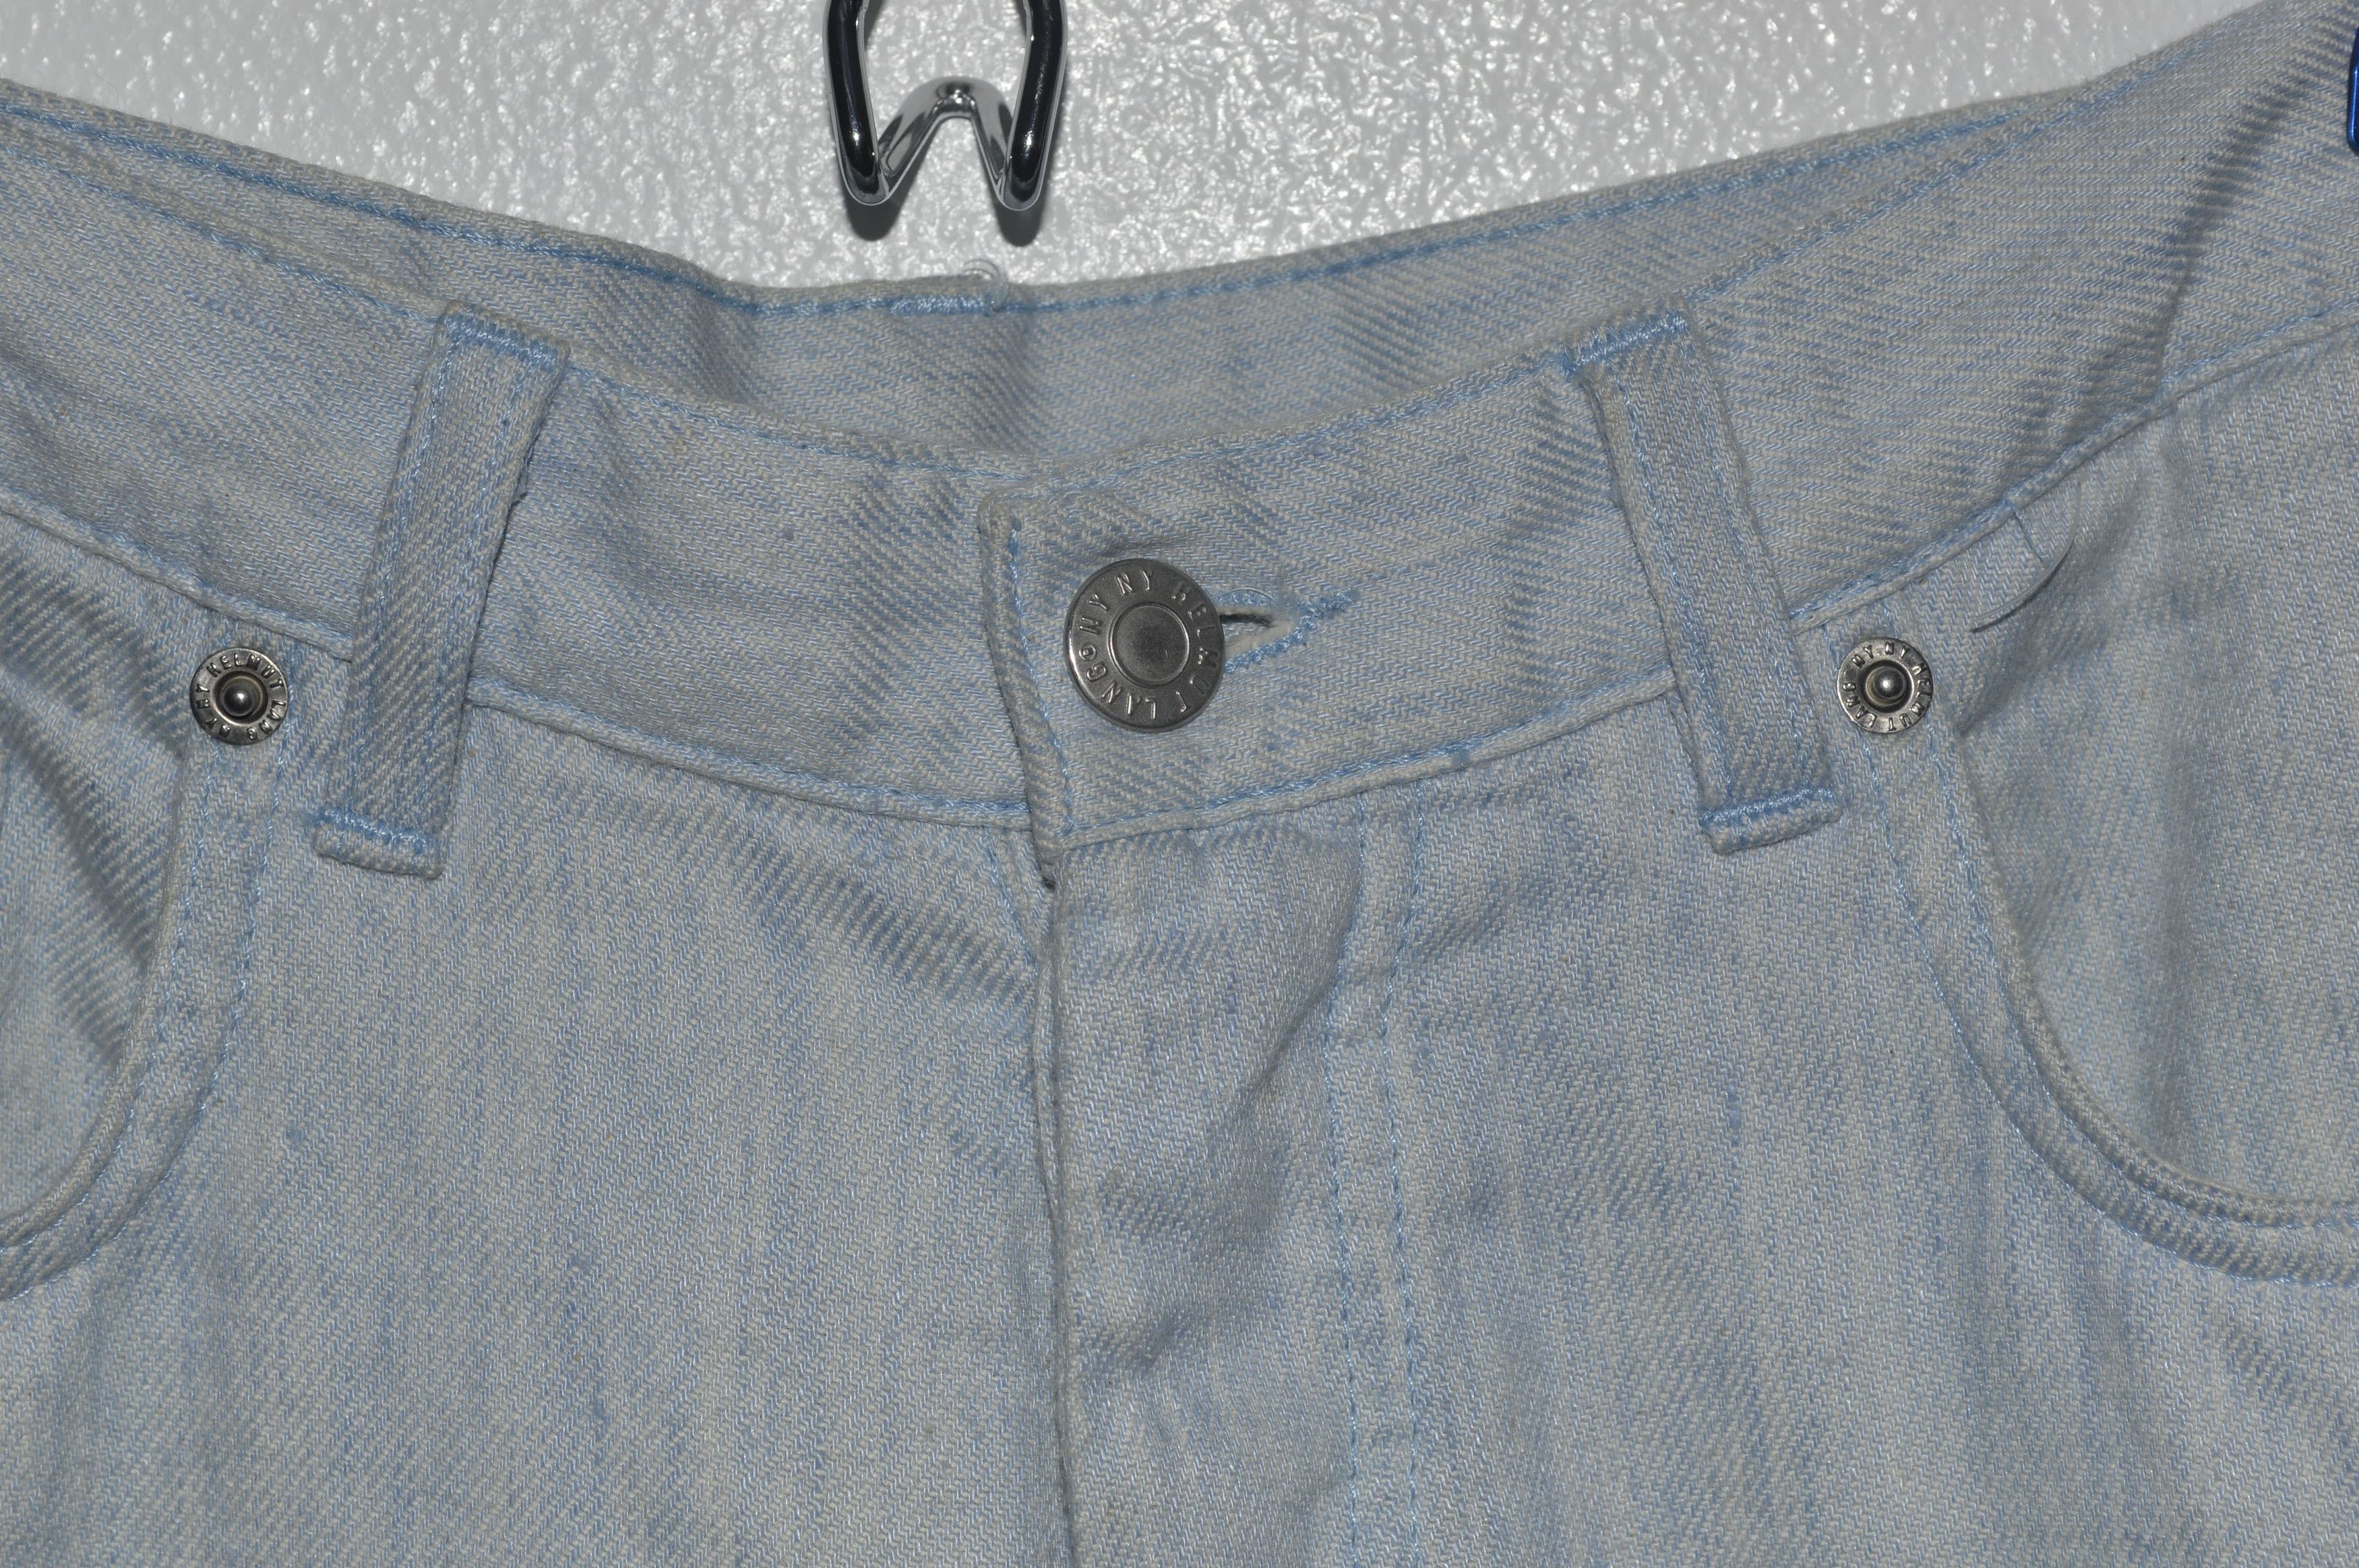 Helmut Lang SS/98 OG Lang Linen/Cotton Light Slim Jeans Mainline Size US 29 - 5 Thumbnail